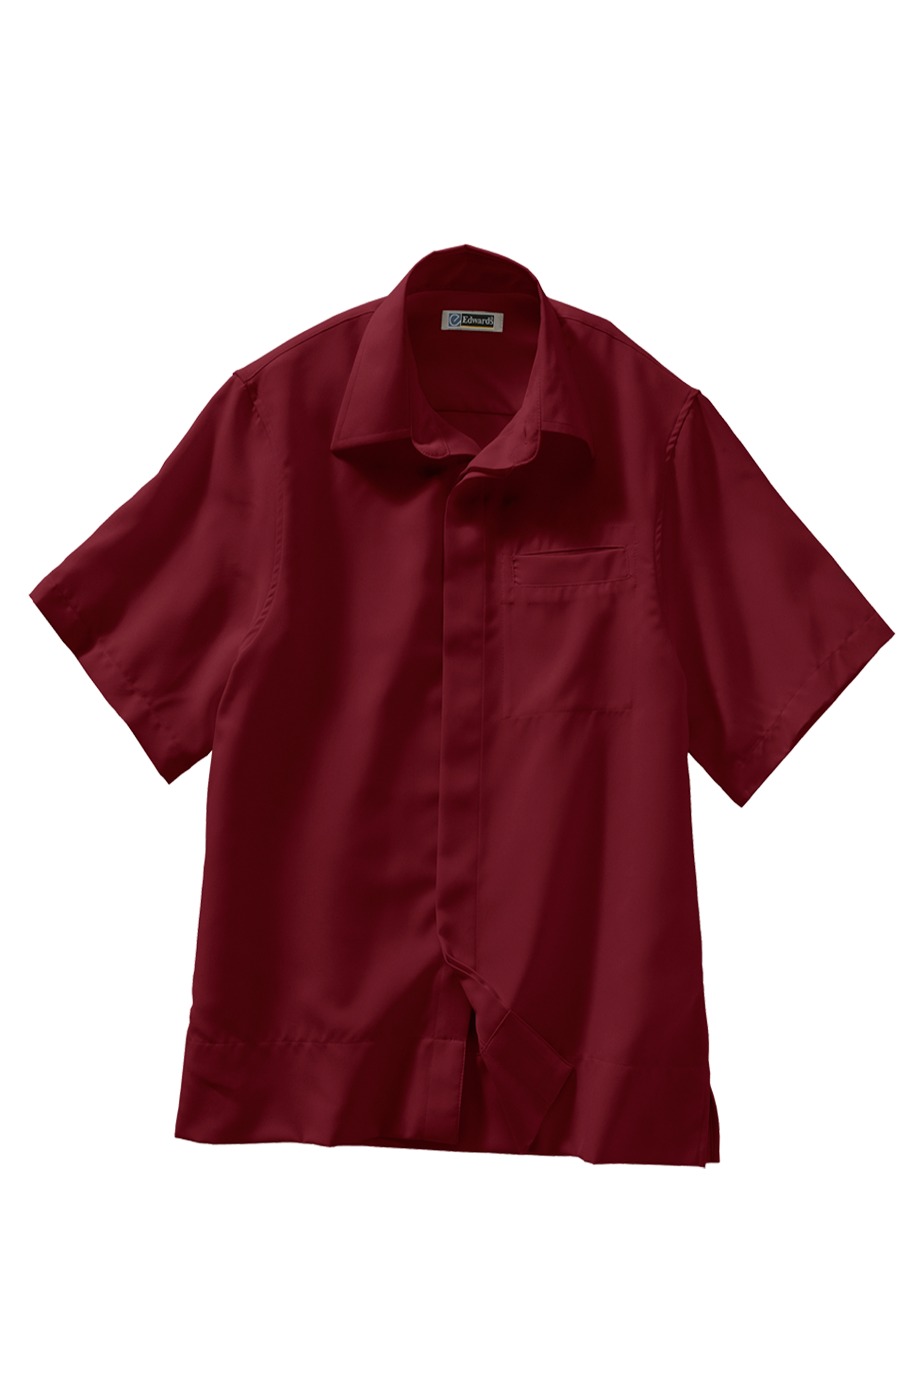 Edwards Garment 1031 - Batiste Camp Shirt